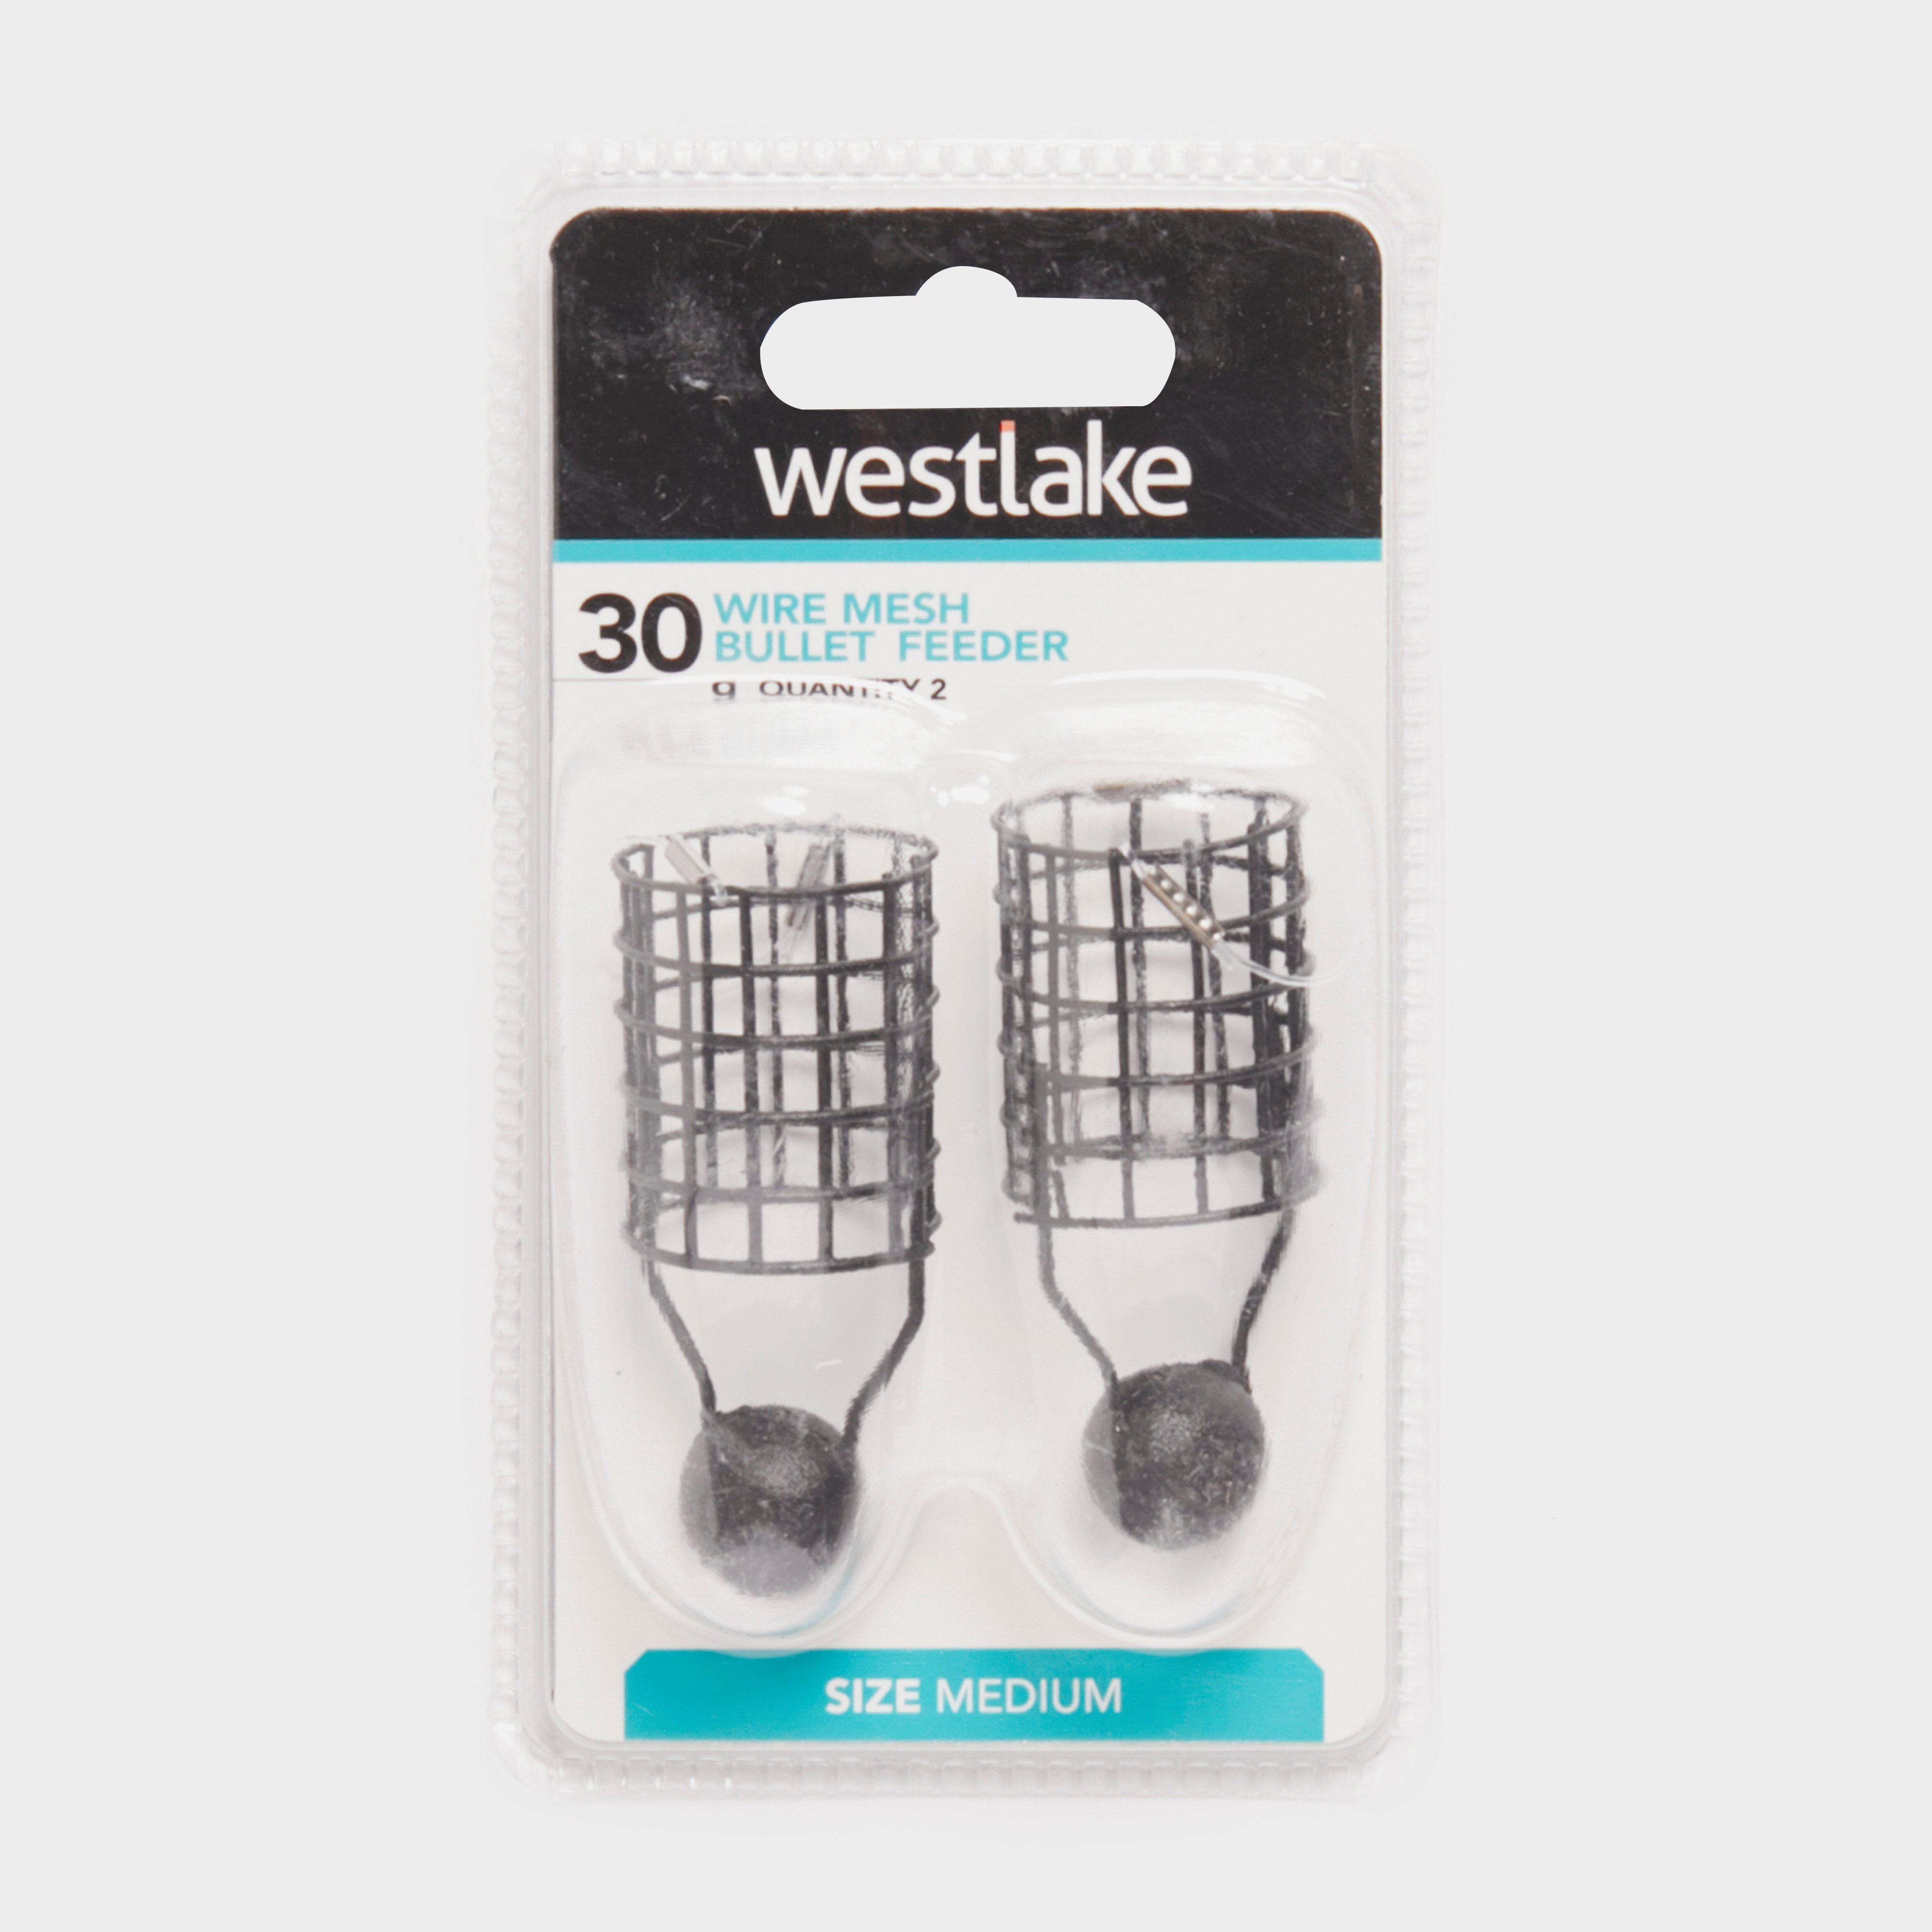 Westlake Wire Mesh Bullet Feeder Medium 30g (2 Pack) - Grey/feeder  Grey/feeder